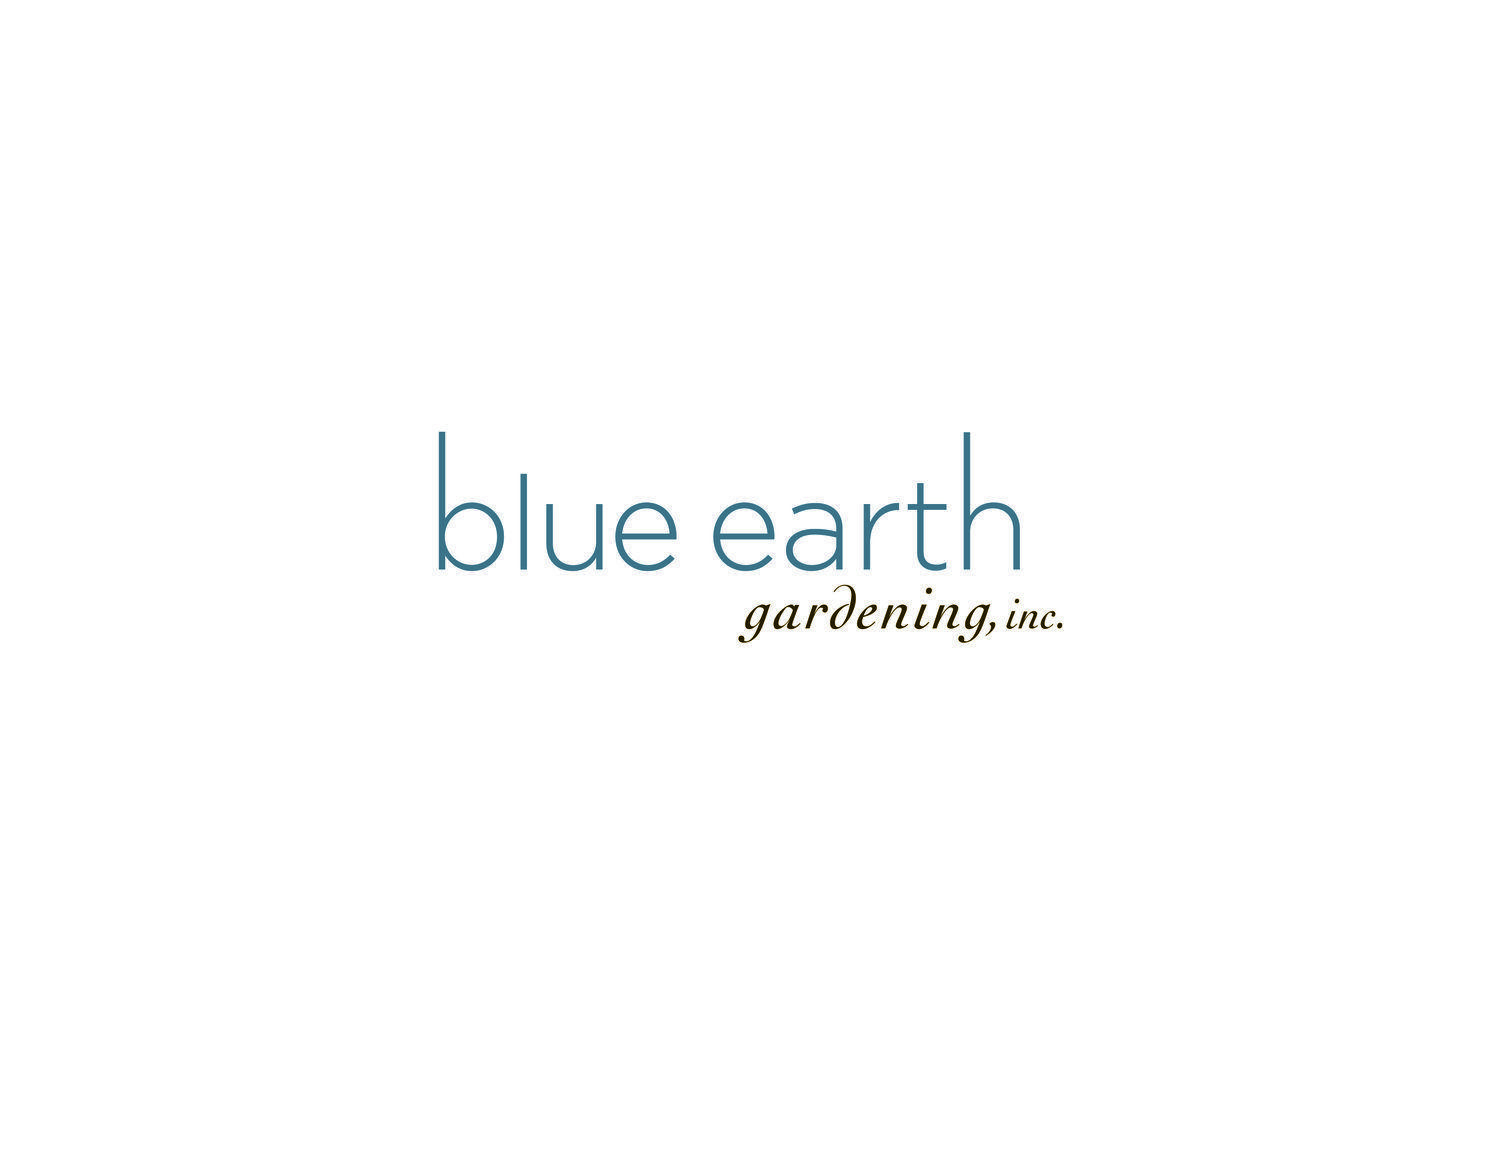 Blue Earth Logo - Contact — blue earth gardening, inc.